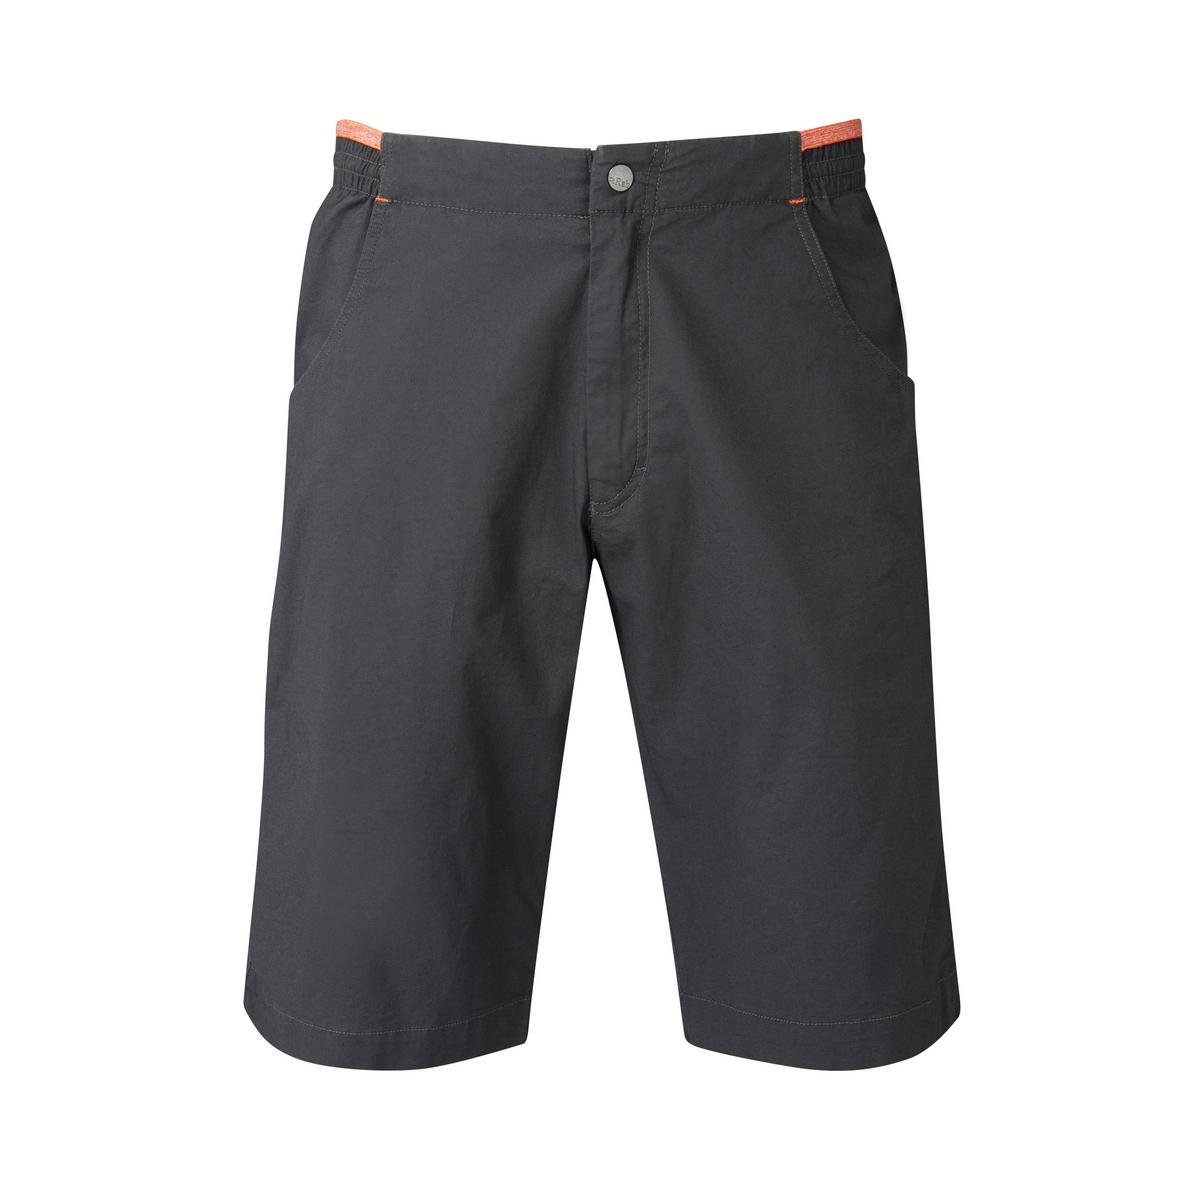 Rab Men's Oblique Shorts - Anthracite